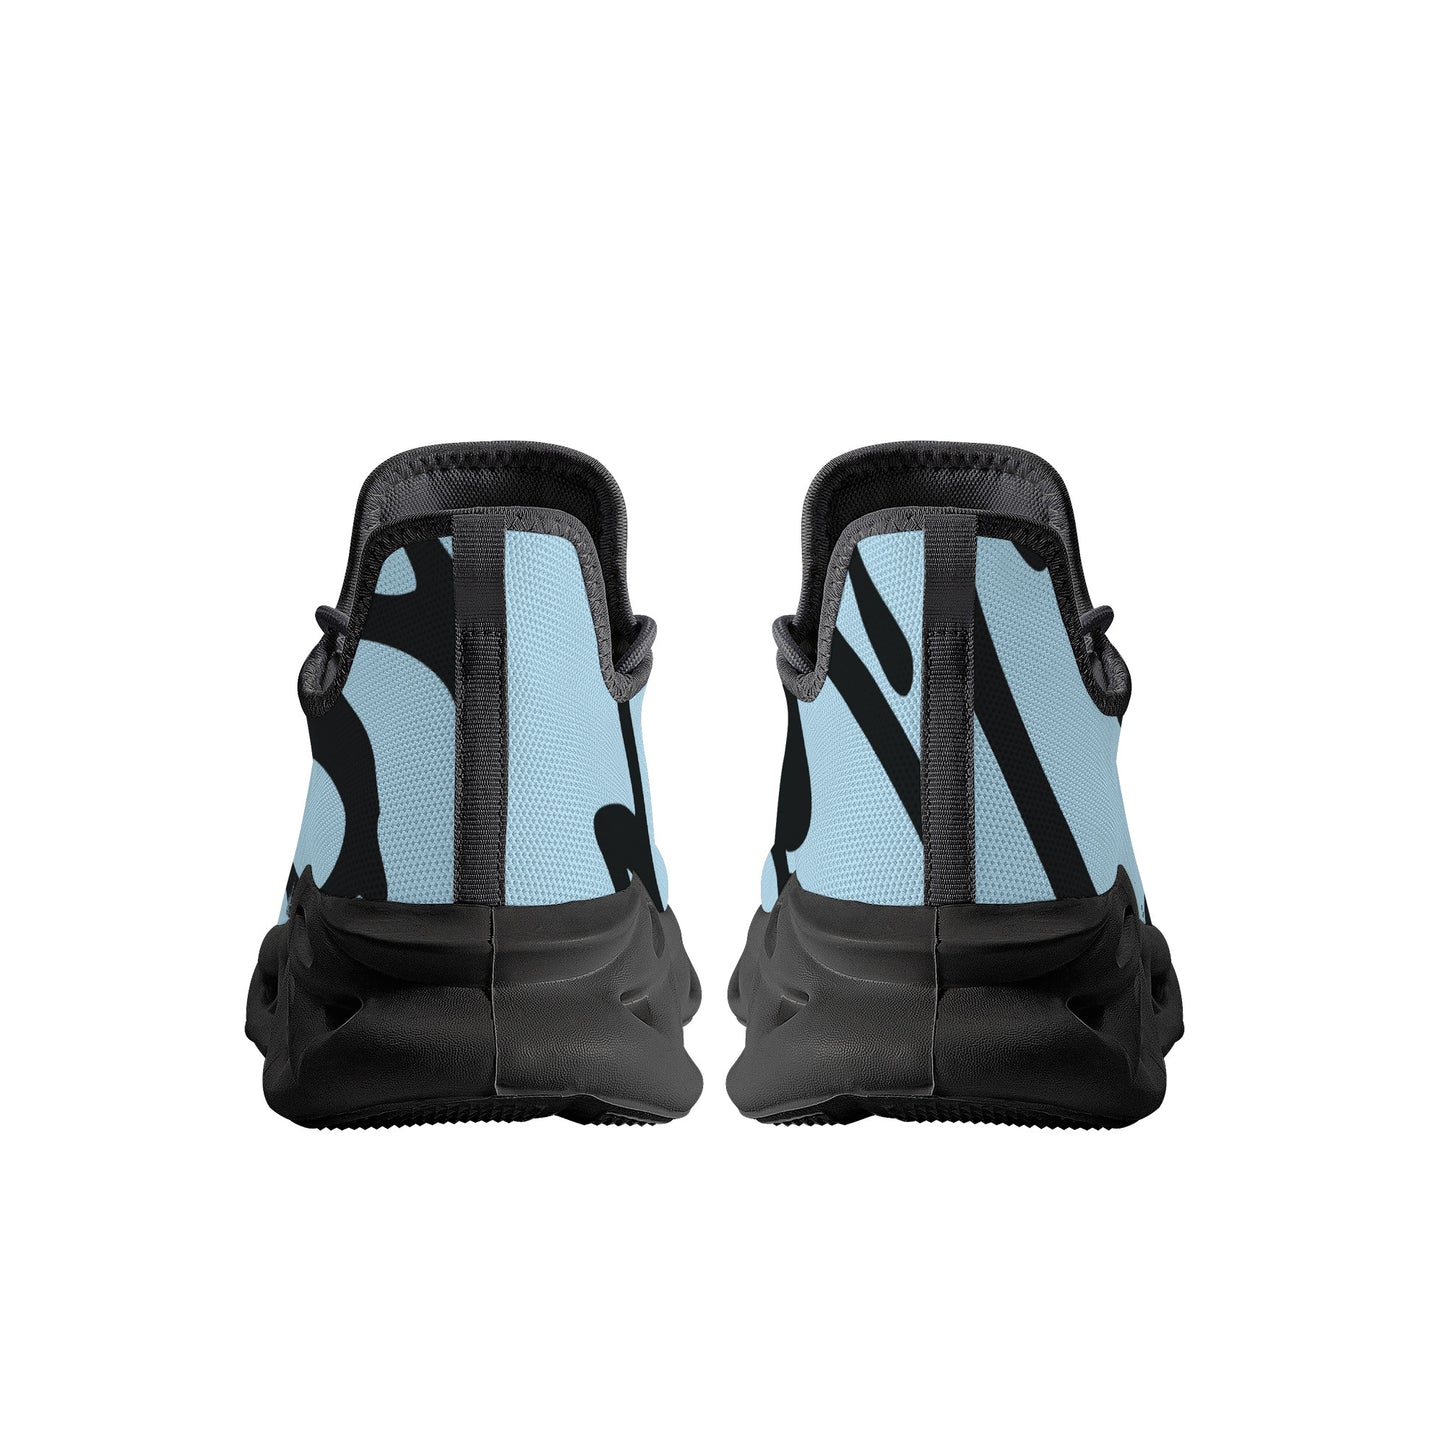 AZOTNO Flex Control Sneaker - LB - Black